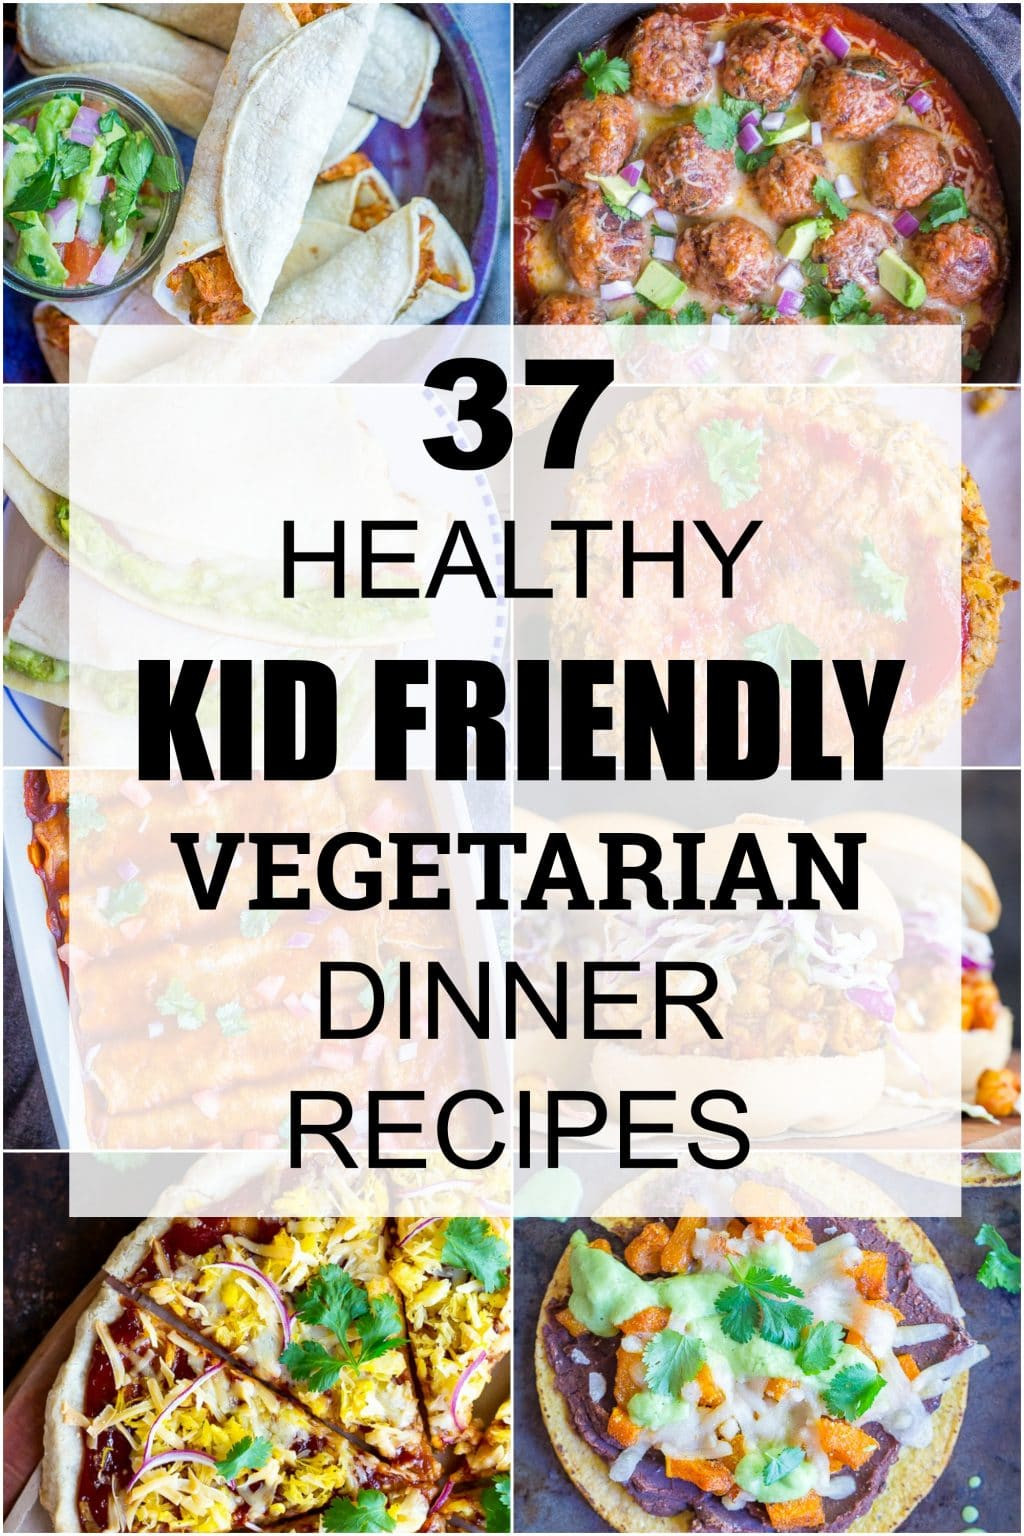 Easy Vegan Dinner Recipes Kid Friendly
 37 Healthy Kid Friendly Ve arian Dinner Recipes She